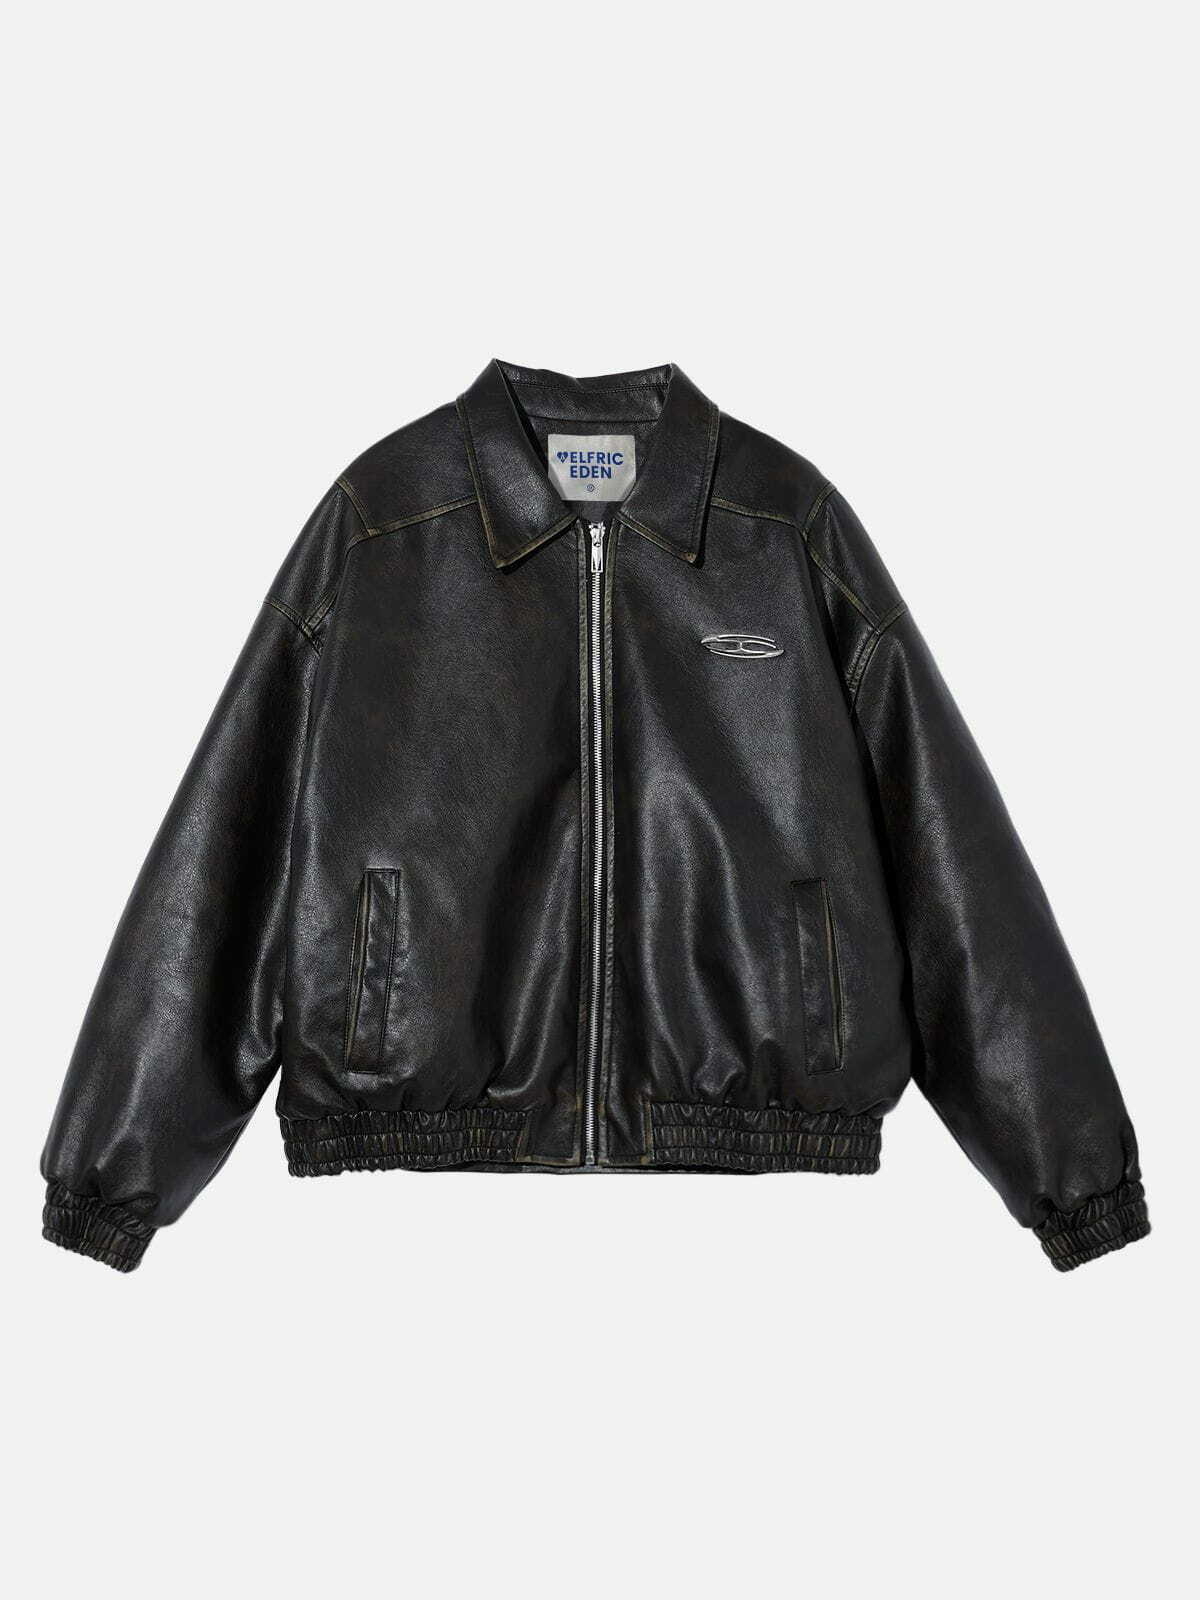 vintage washed faux leather jacket edgy & retro streetwear 3088